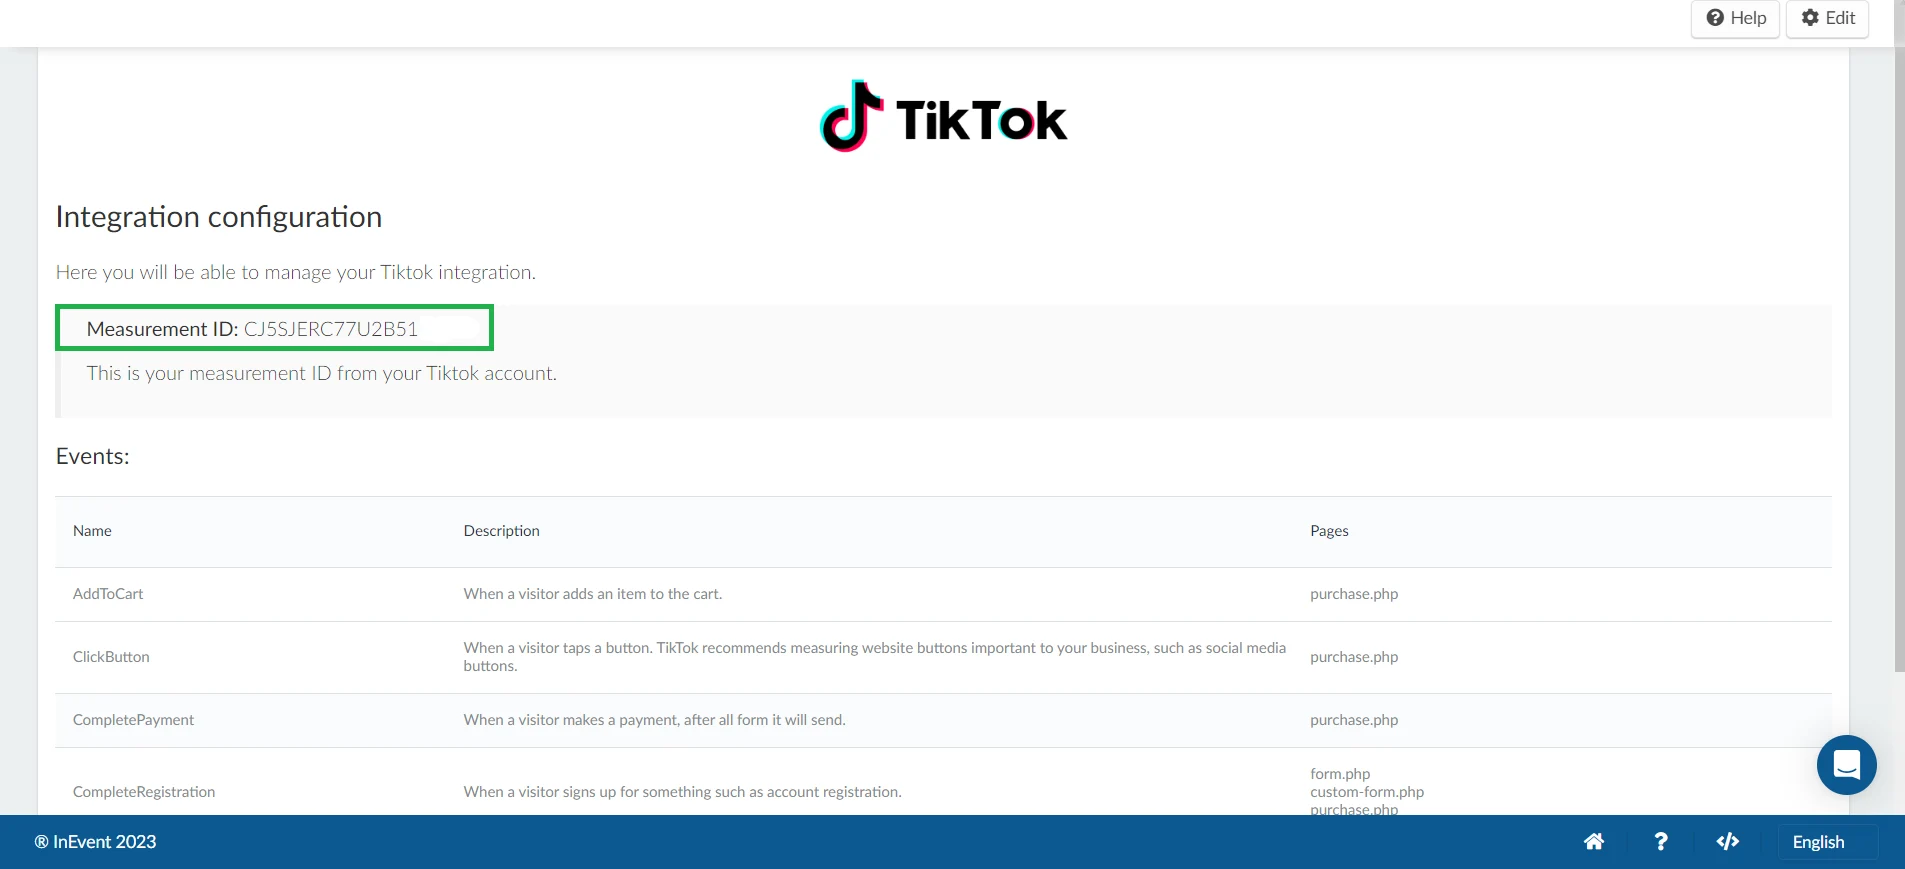 TikTok integration page